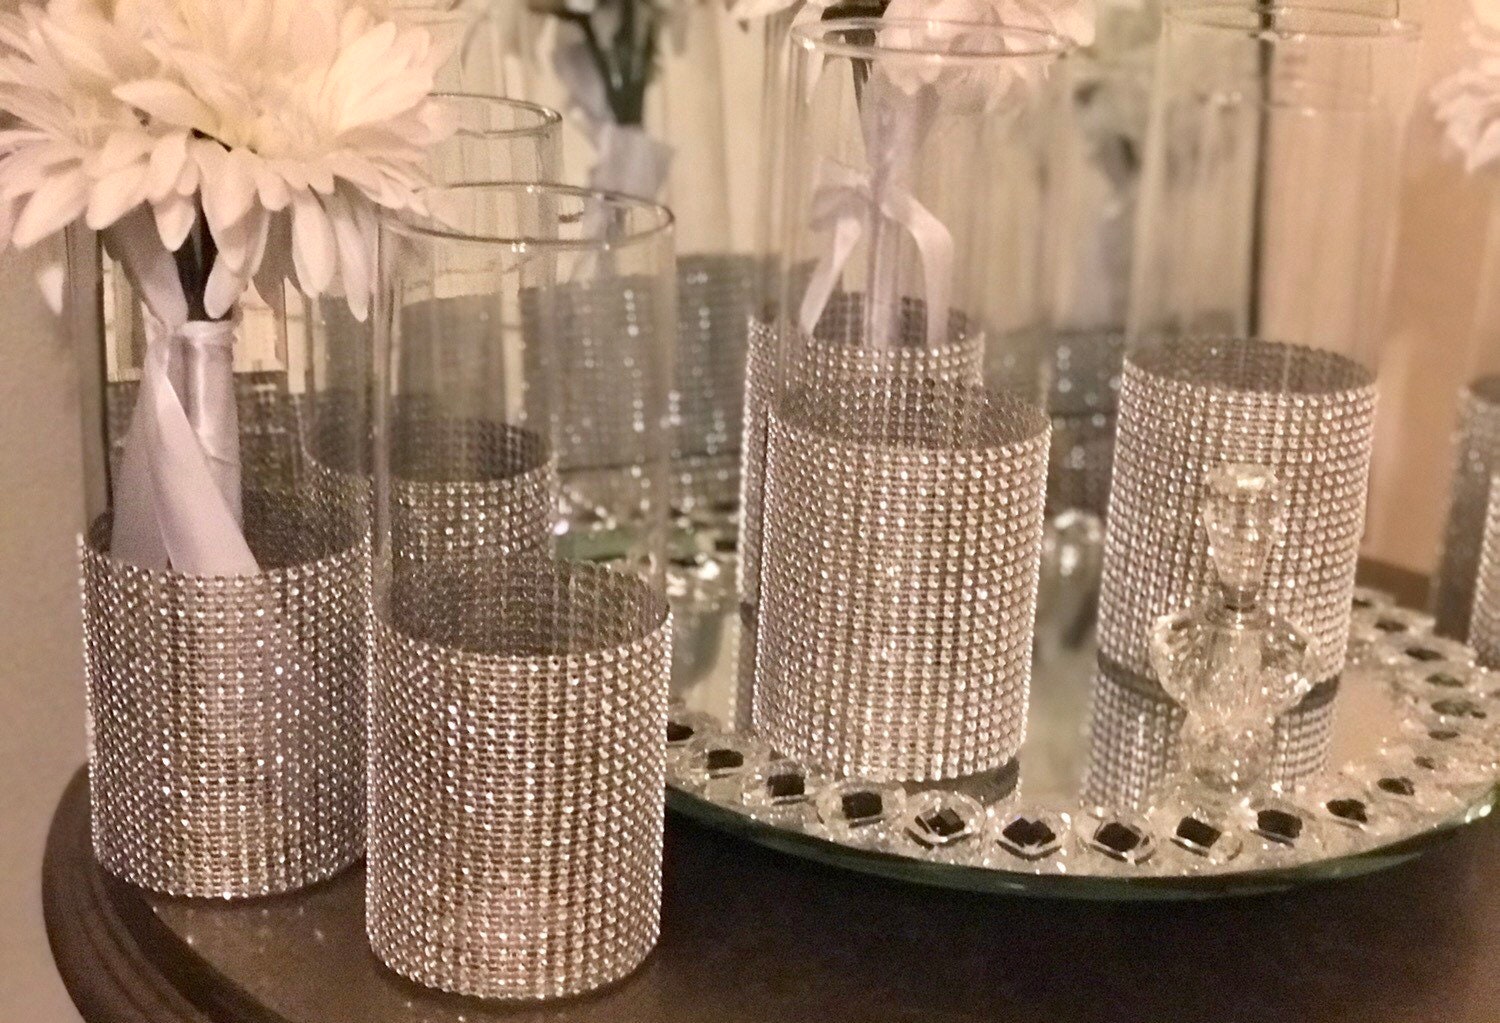 Centerpieces, Wedding Decor, Cylinder Vases With Silver Rhinestone Look  Mesh Wrap Bridal Bouquet Holders Tall Centerpieces Wedding Decor -   Denmark